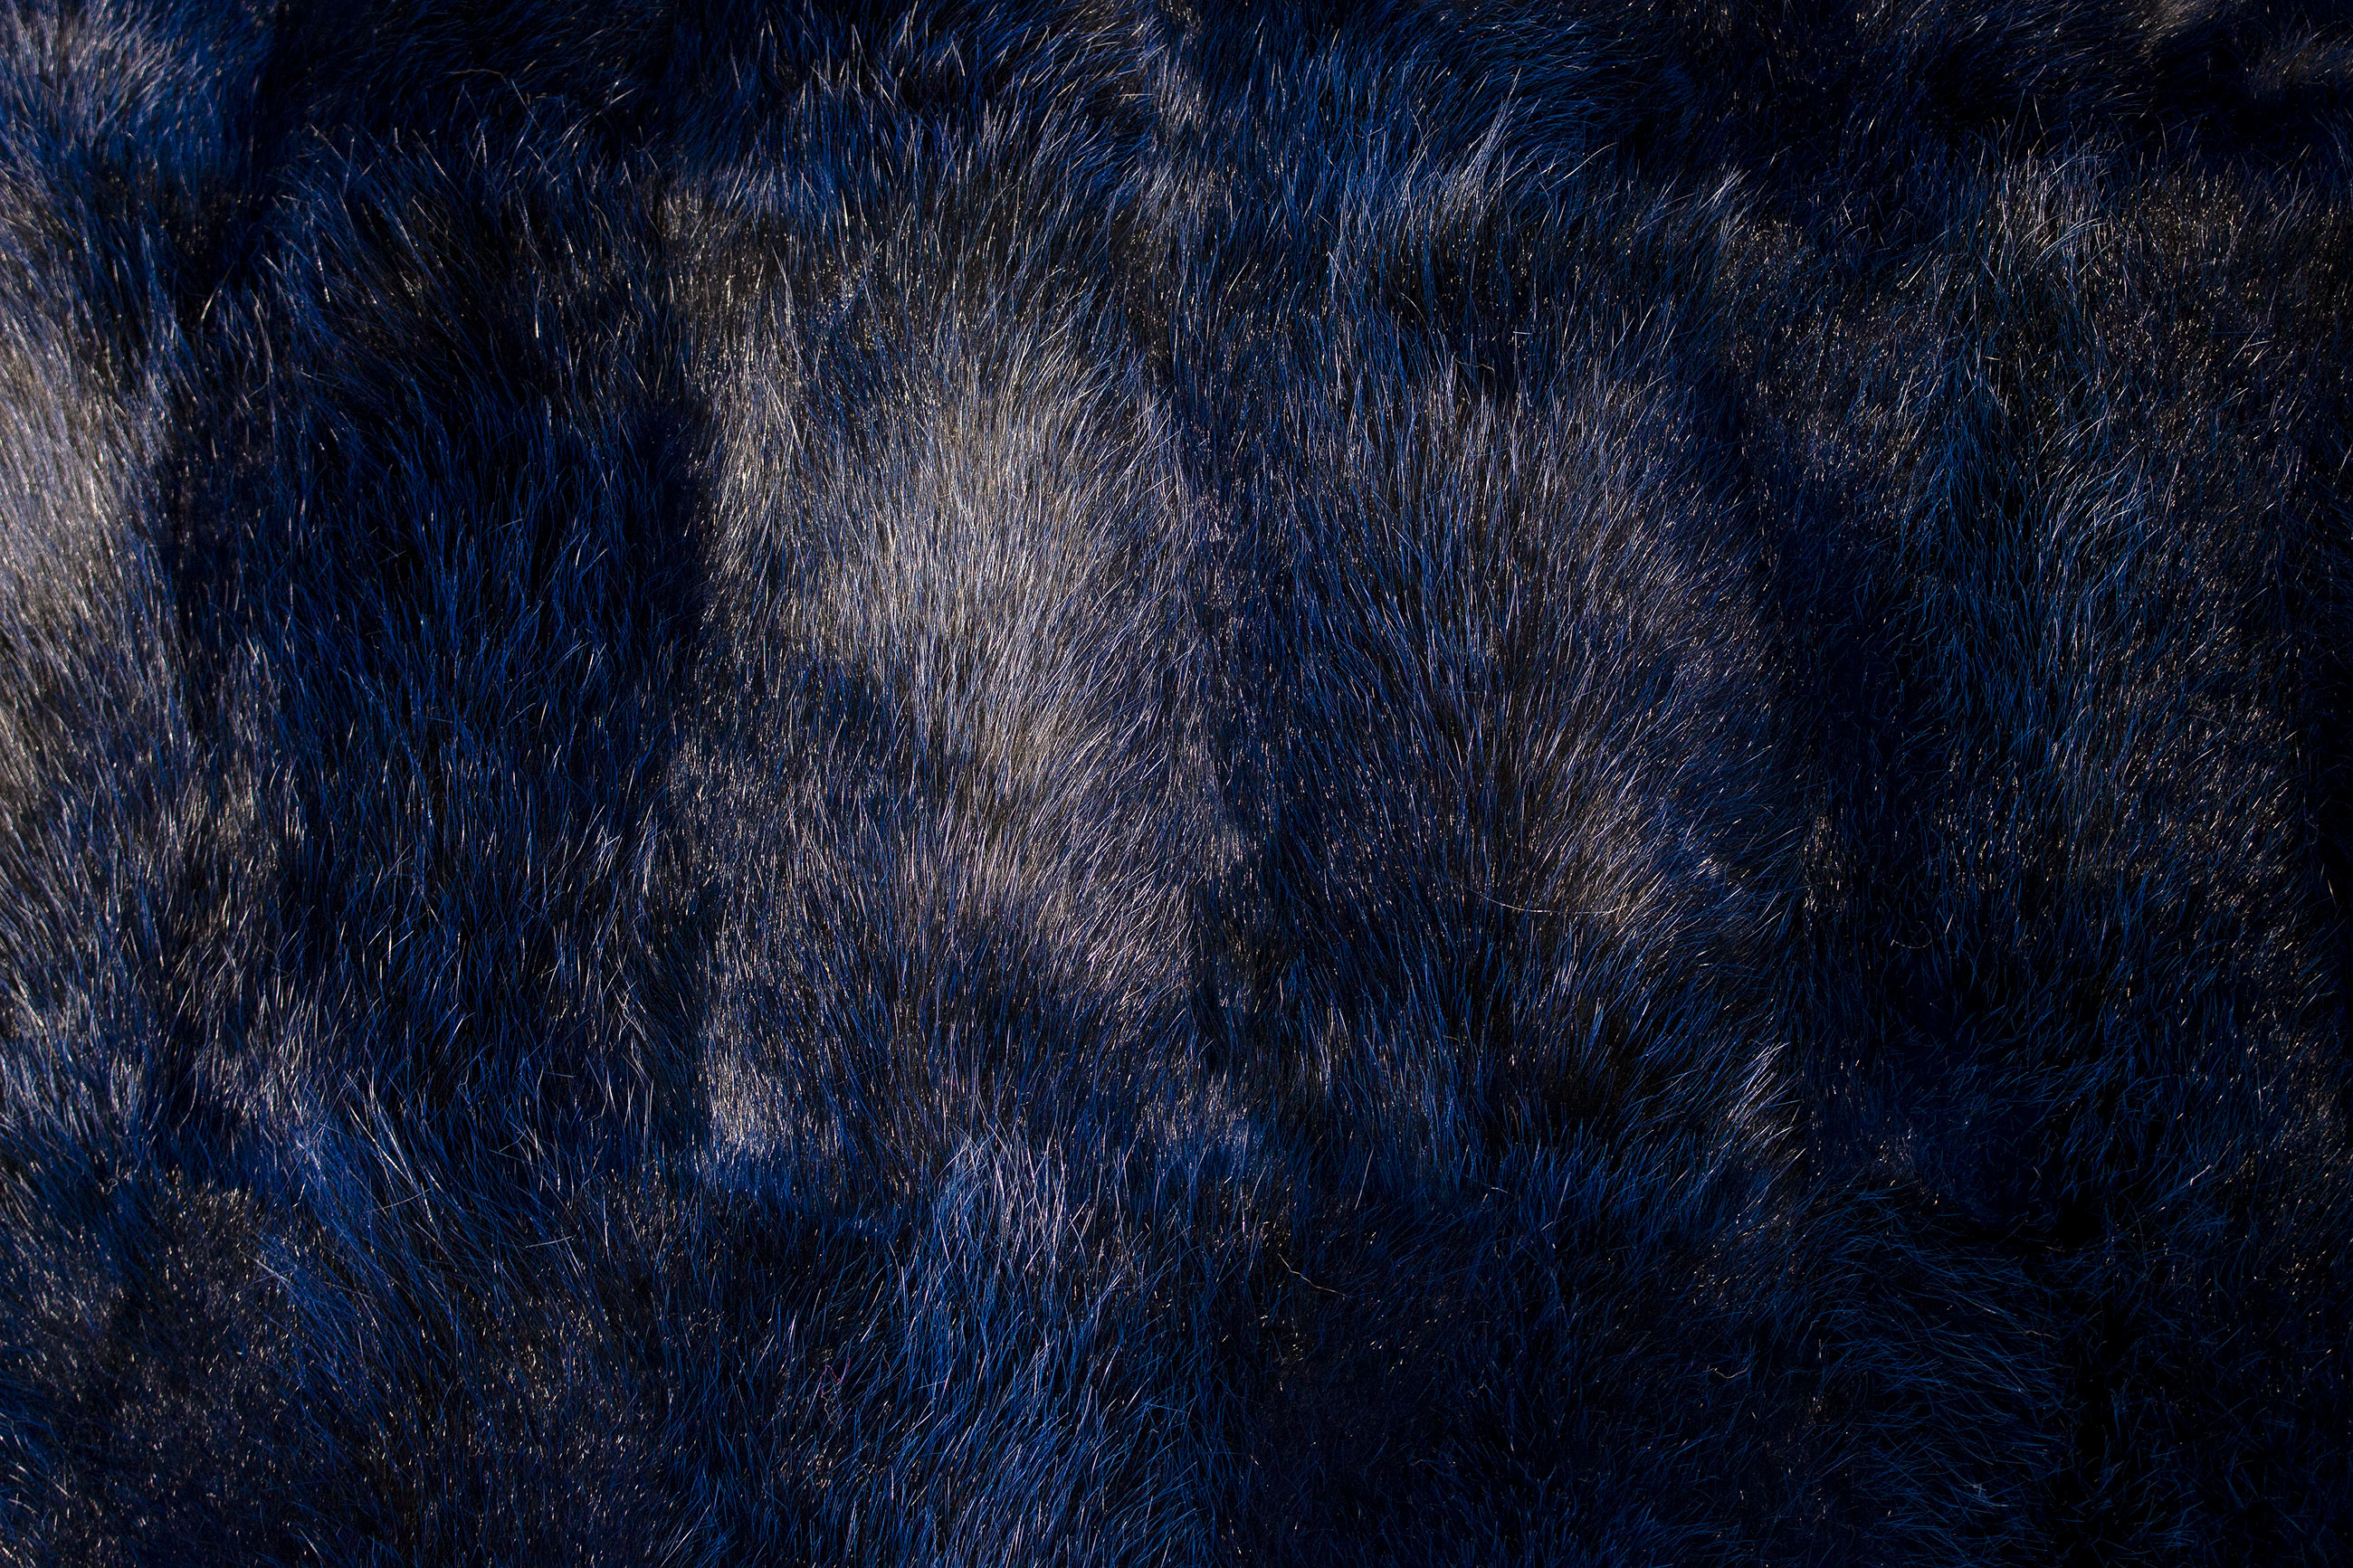 Real Possum Fur Carpet in Ocean Blue - 100% Wild Fur